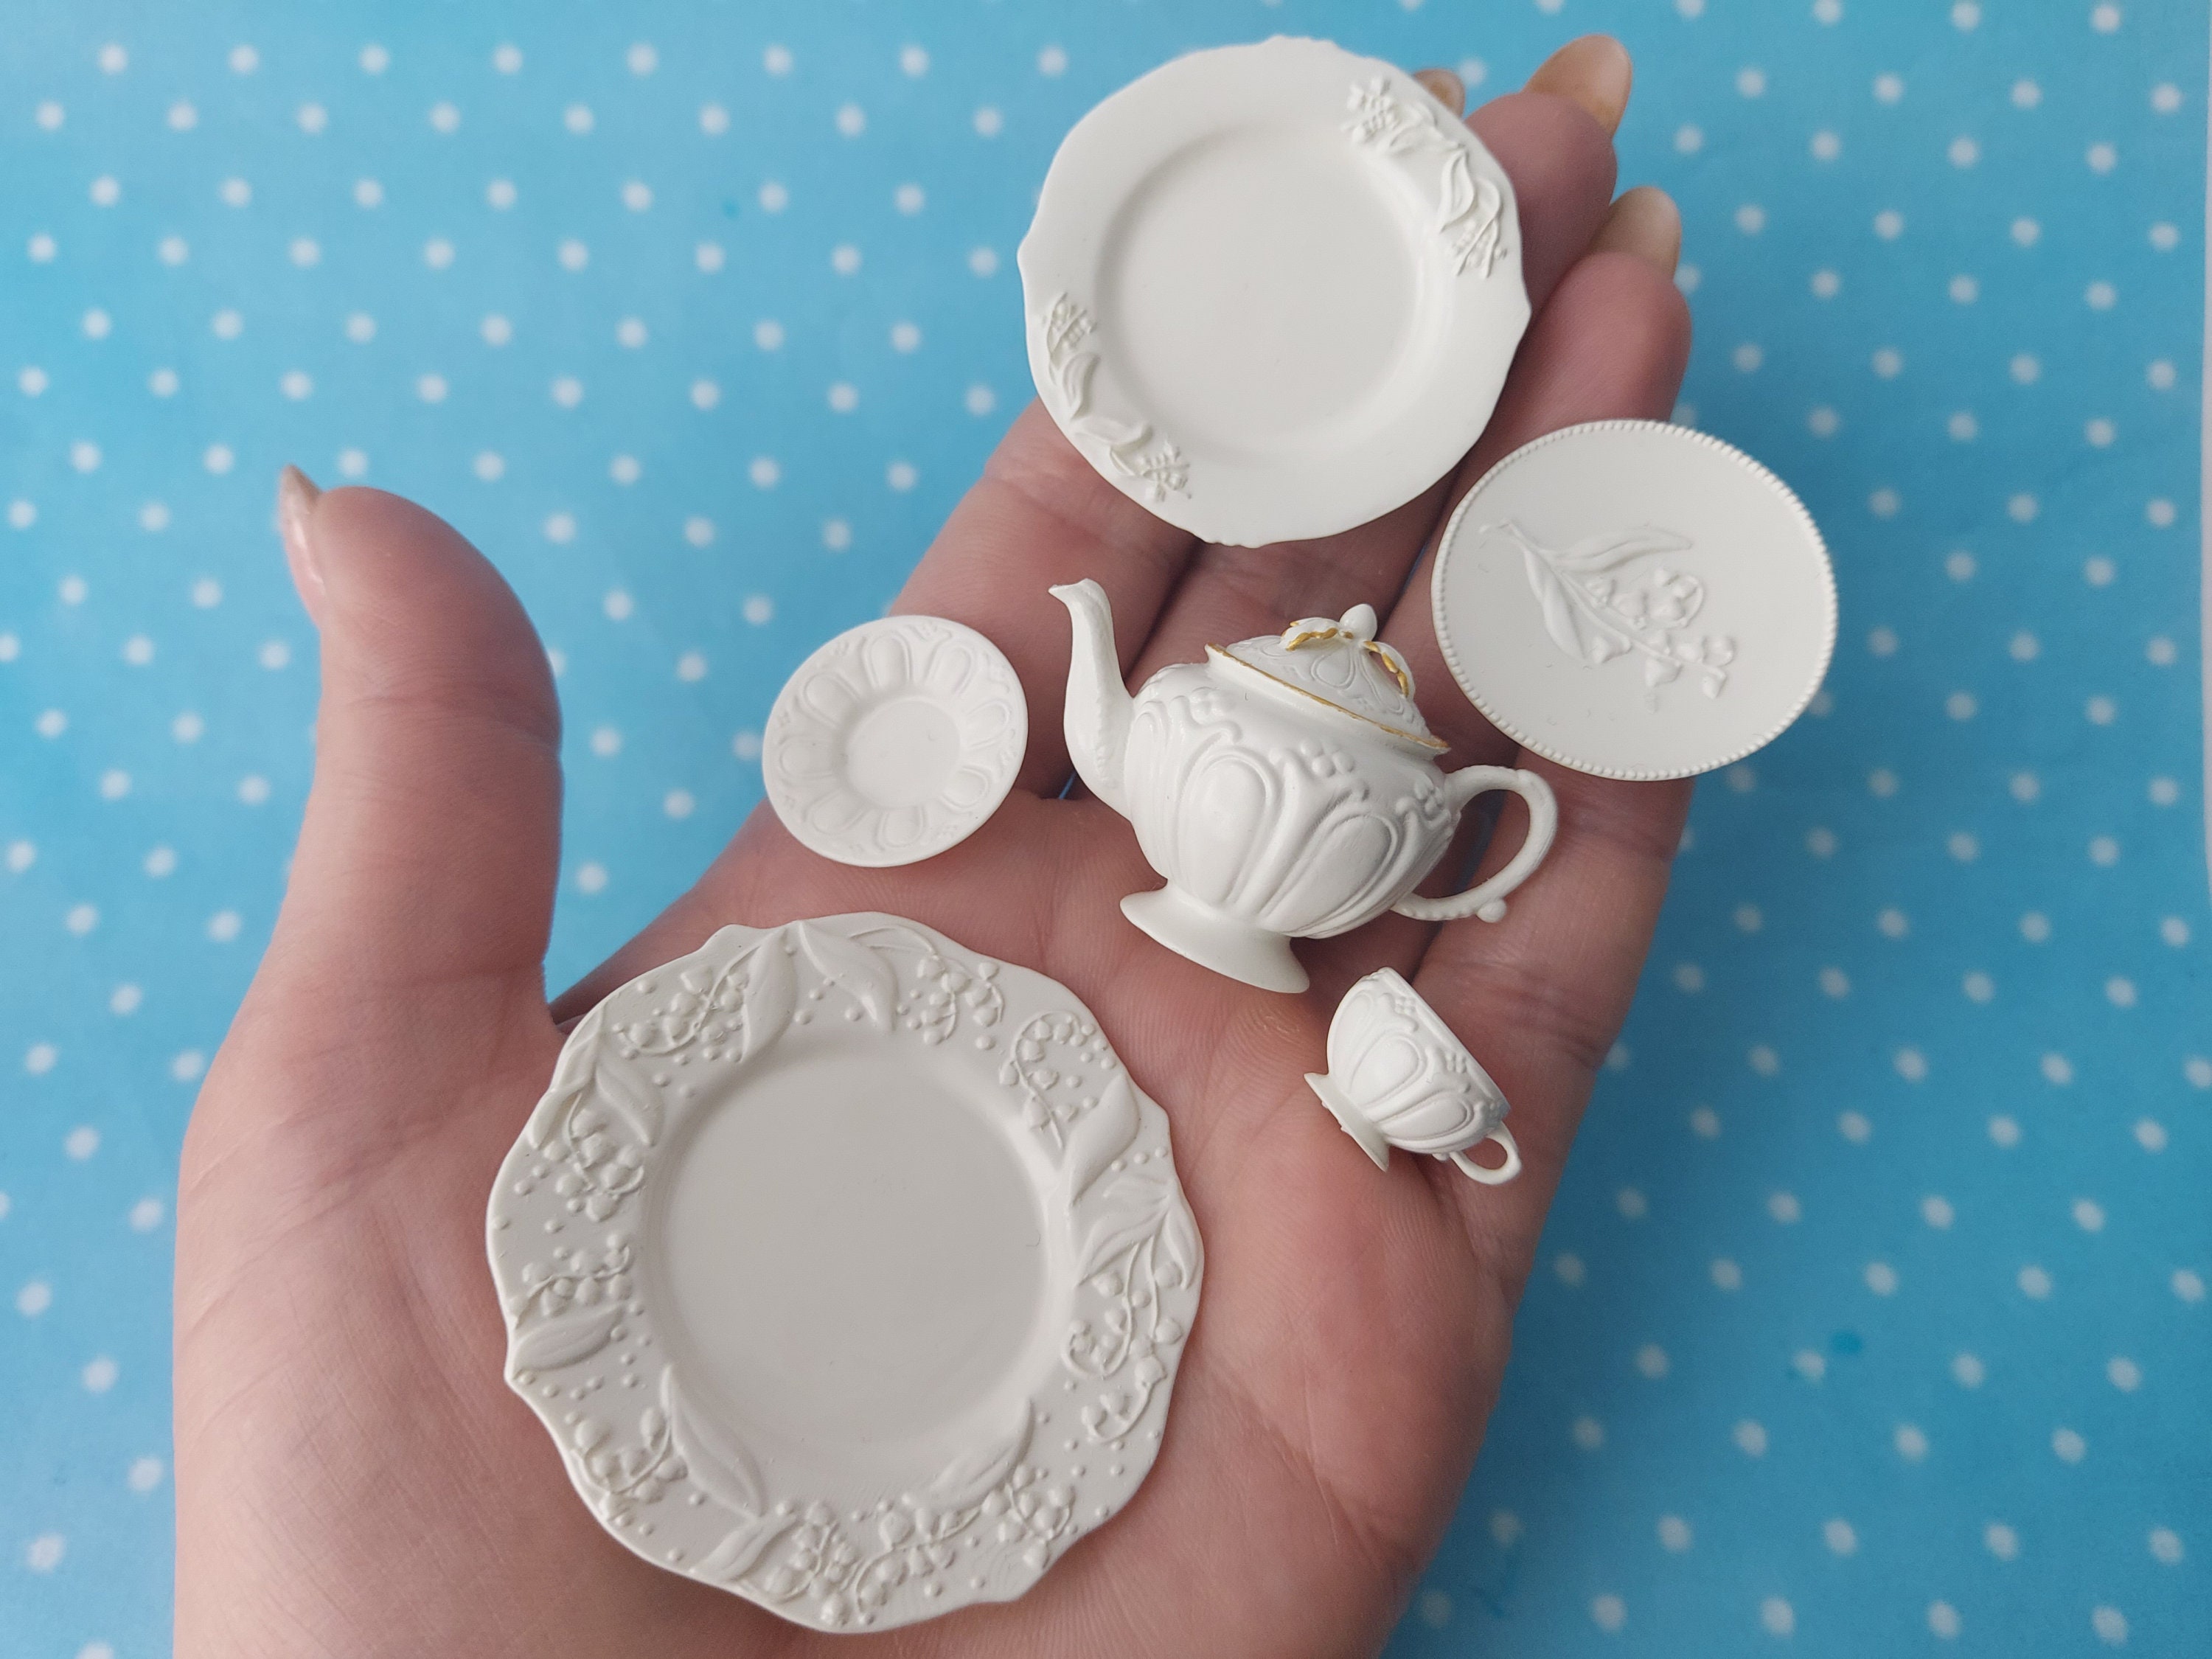 10.75 Dinner Plate Mold Plaster Drape Mold for Pottery, Ceramics,  Made-to-order 